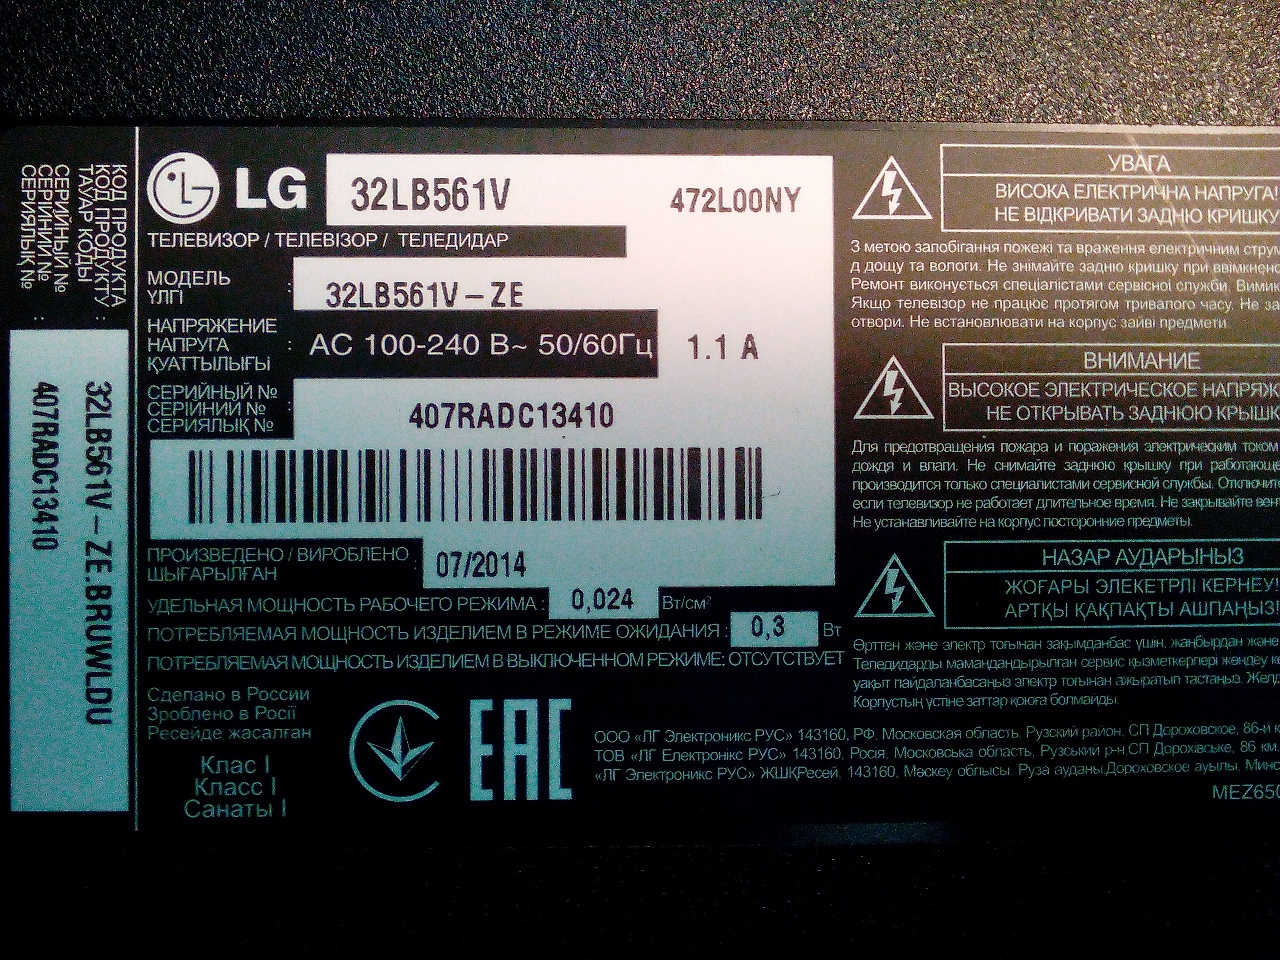 MAIN PCB LC43B/LD43B/LB43T EAX 65388005 (1.0)